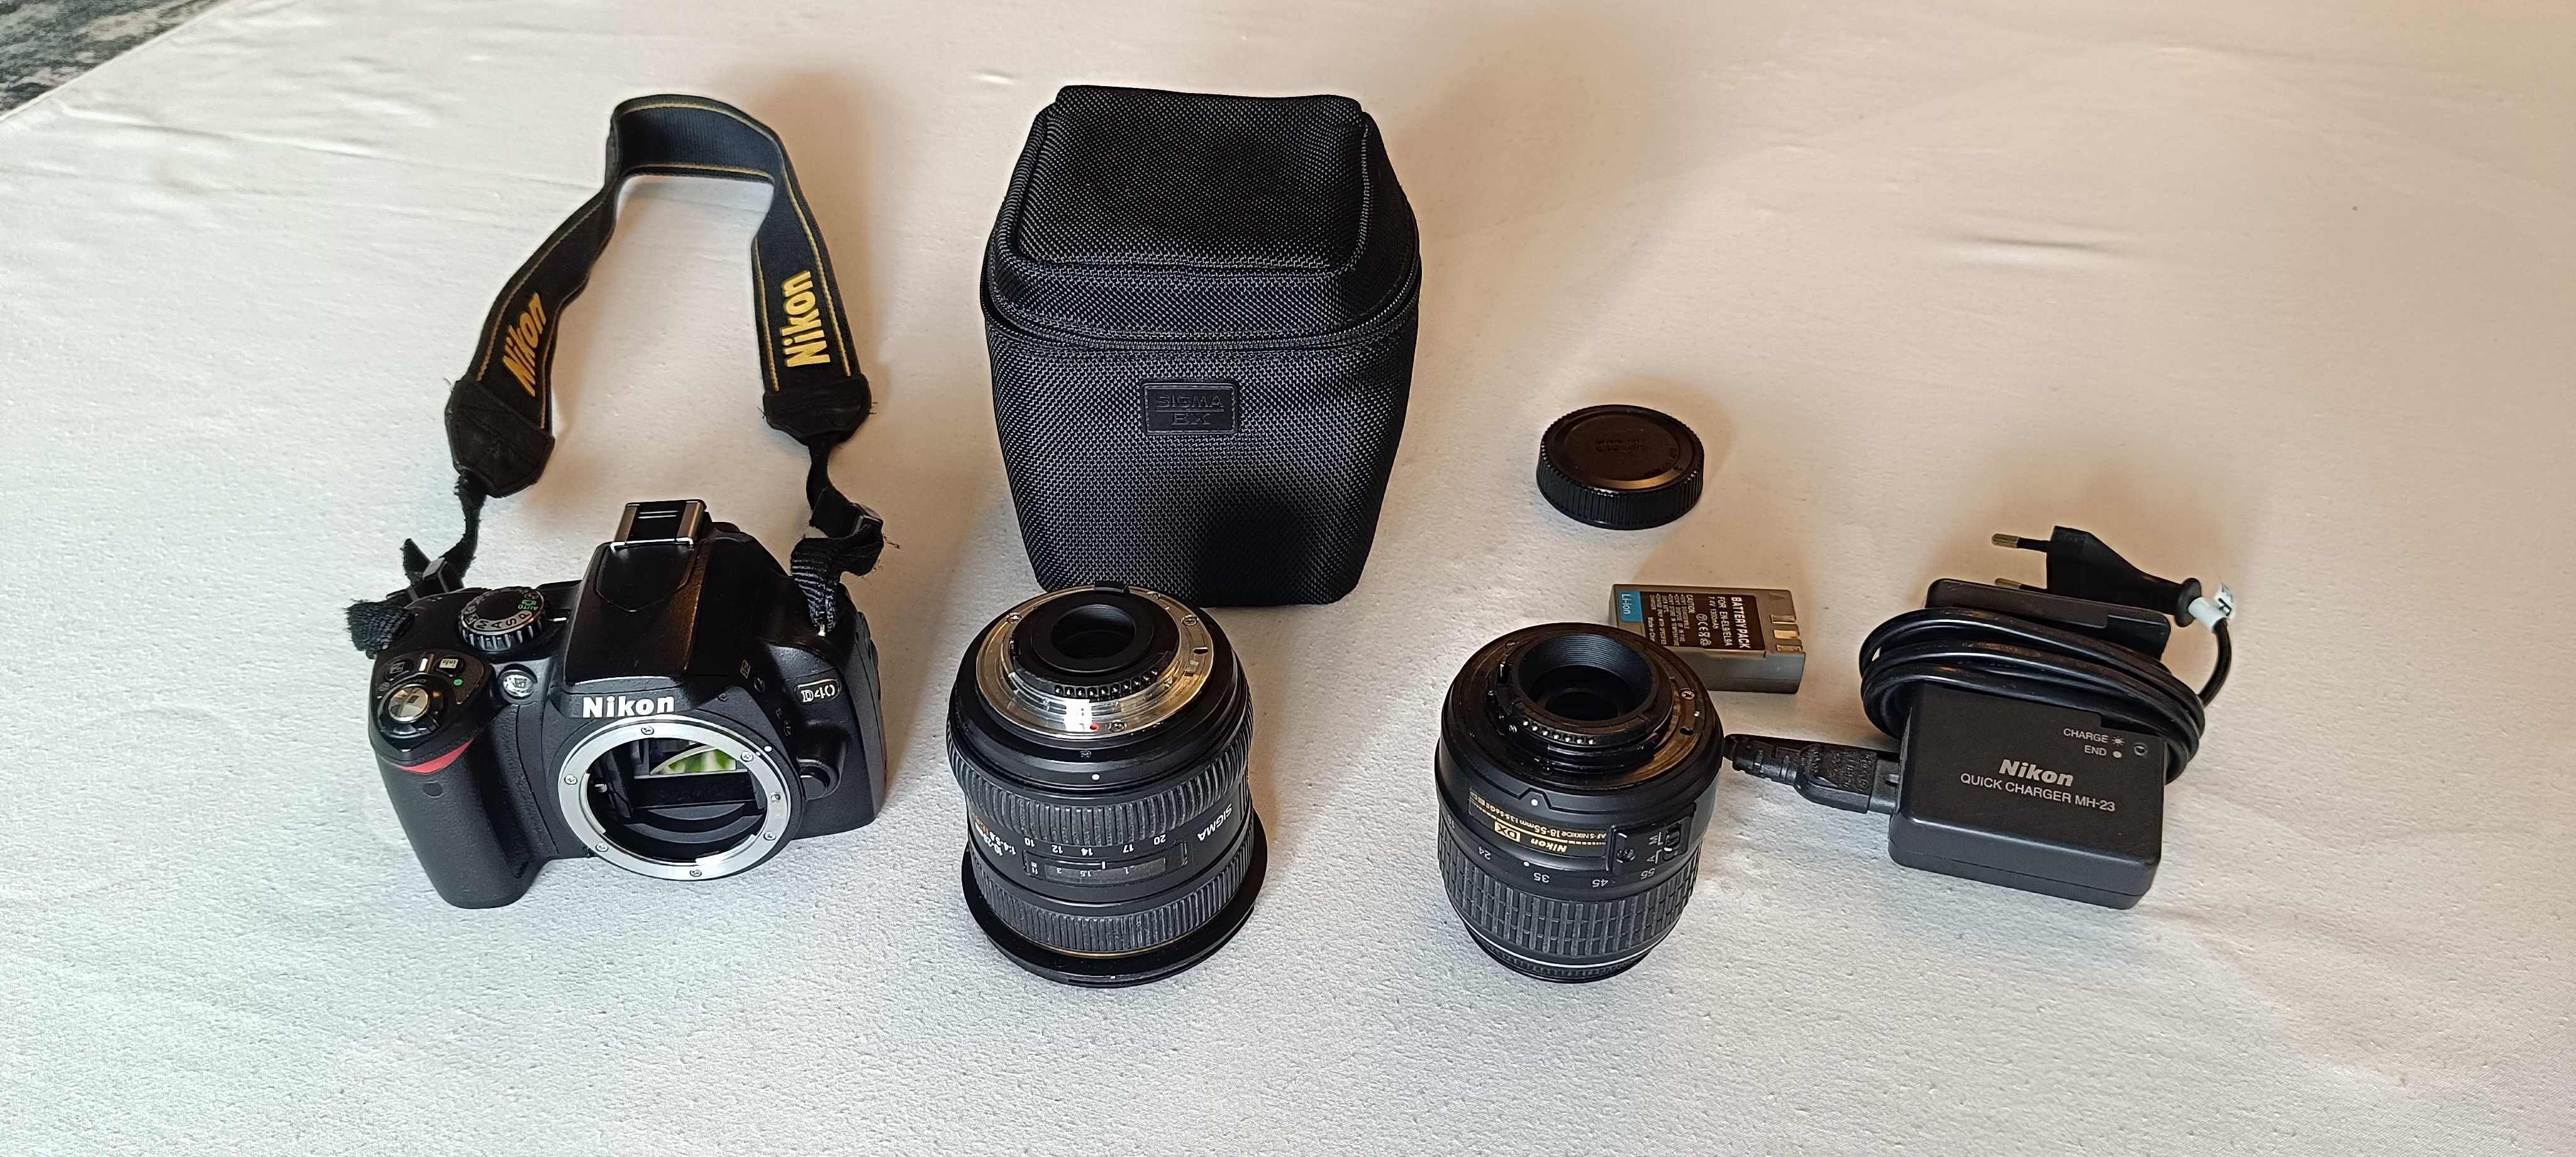 Aparat foto DSLR Nikon D40 + obiectiv Sigma 10-20 + Nikkor 18-55